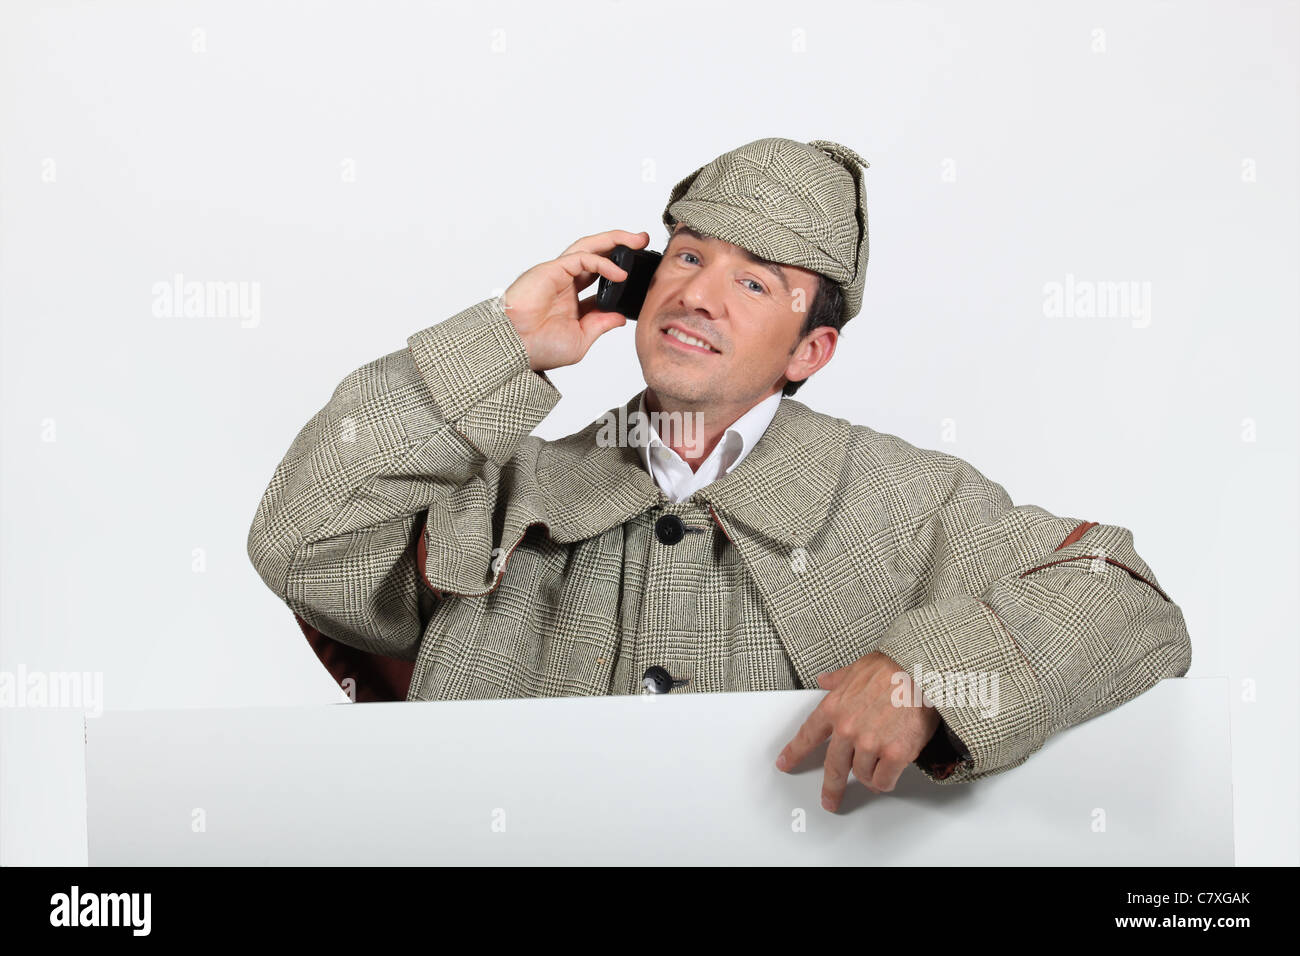 Man dressed as Sherlock Holmes Stock Photo